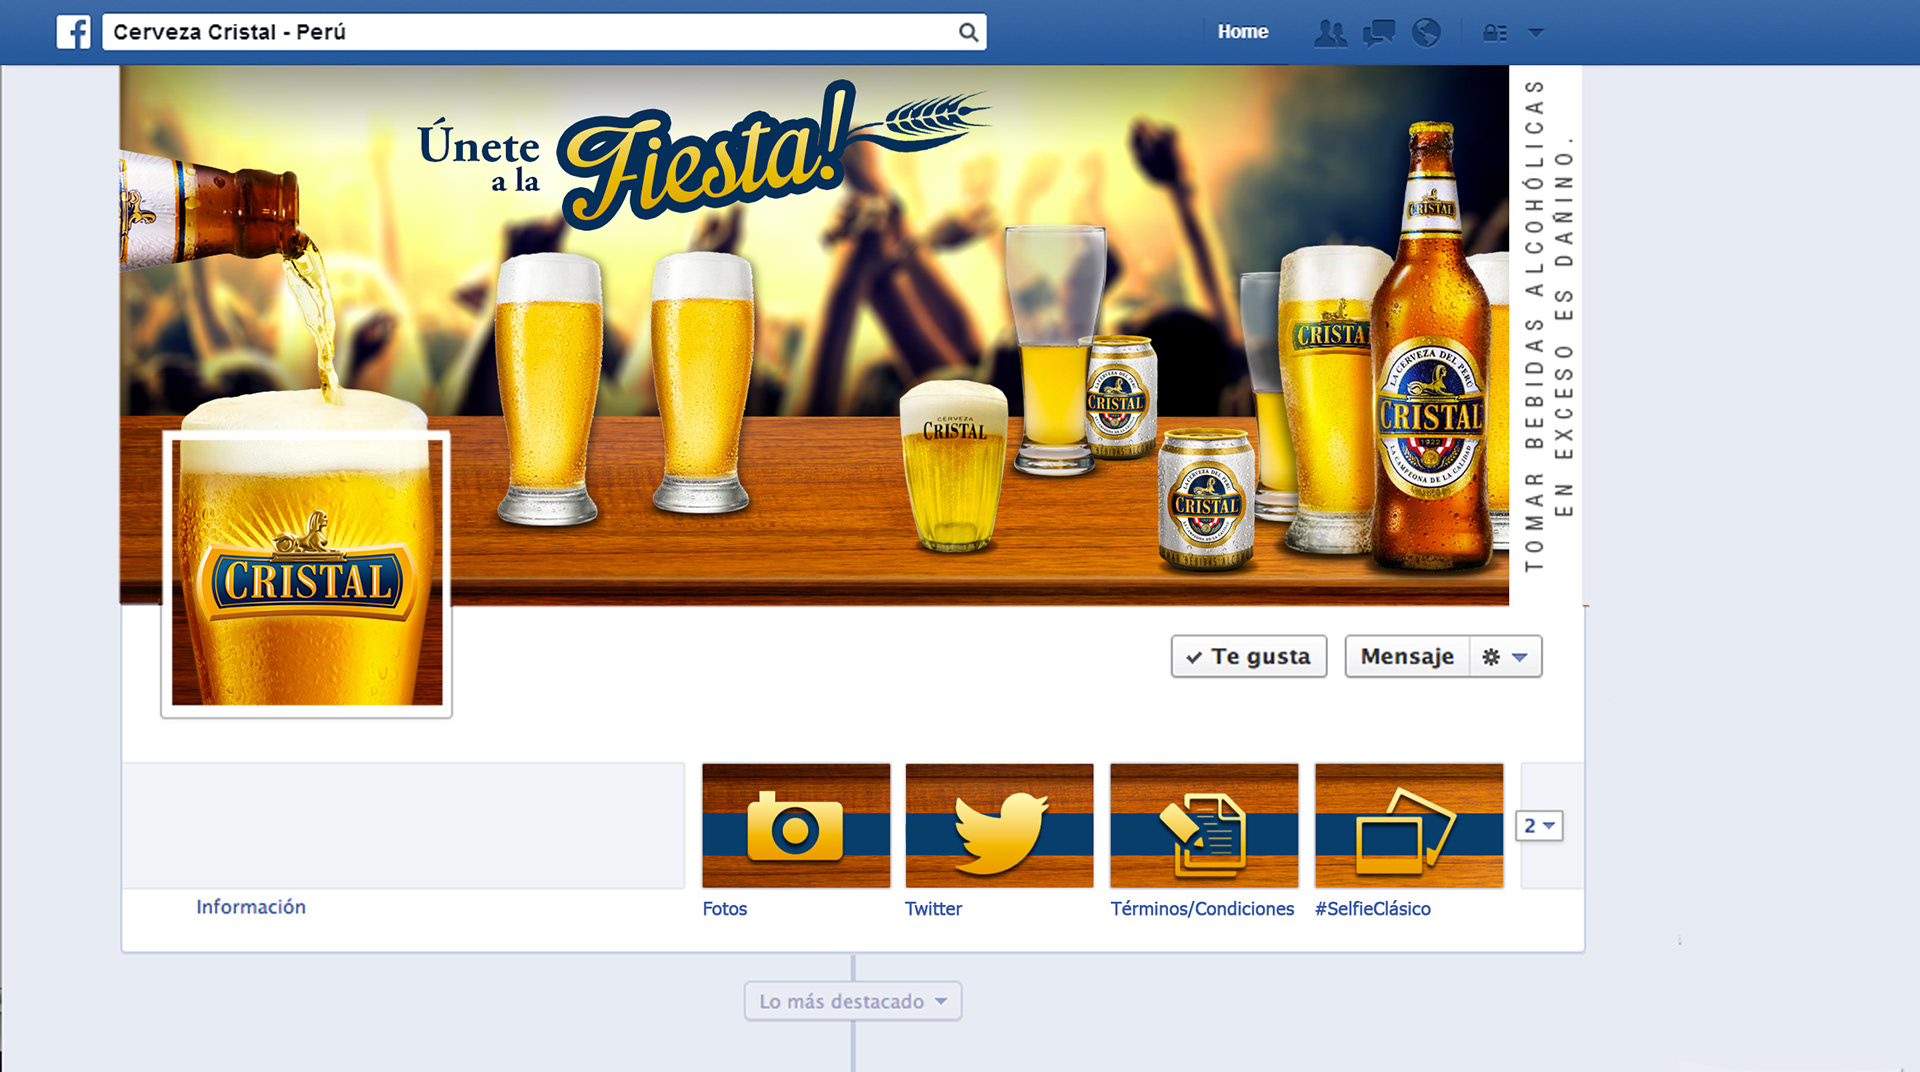 Diana Morillo - Facebook fanpage - Cerveza Cristal